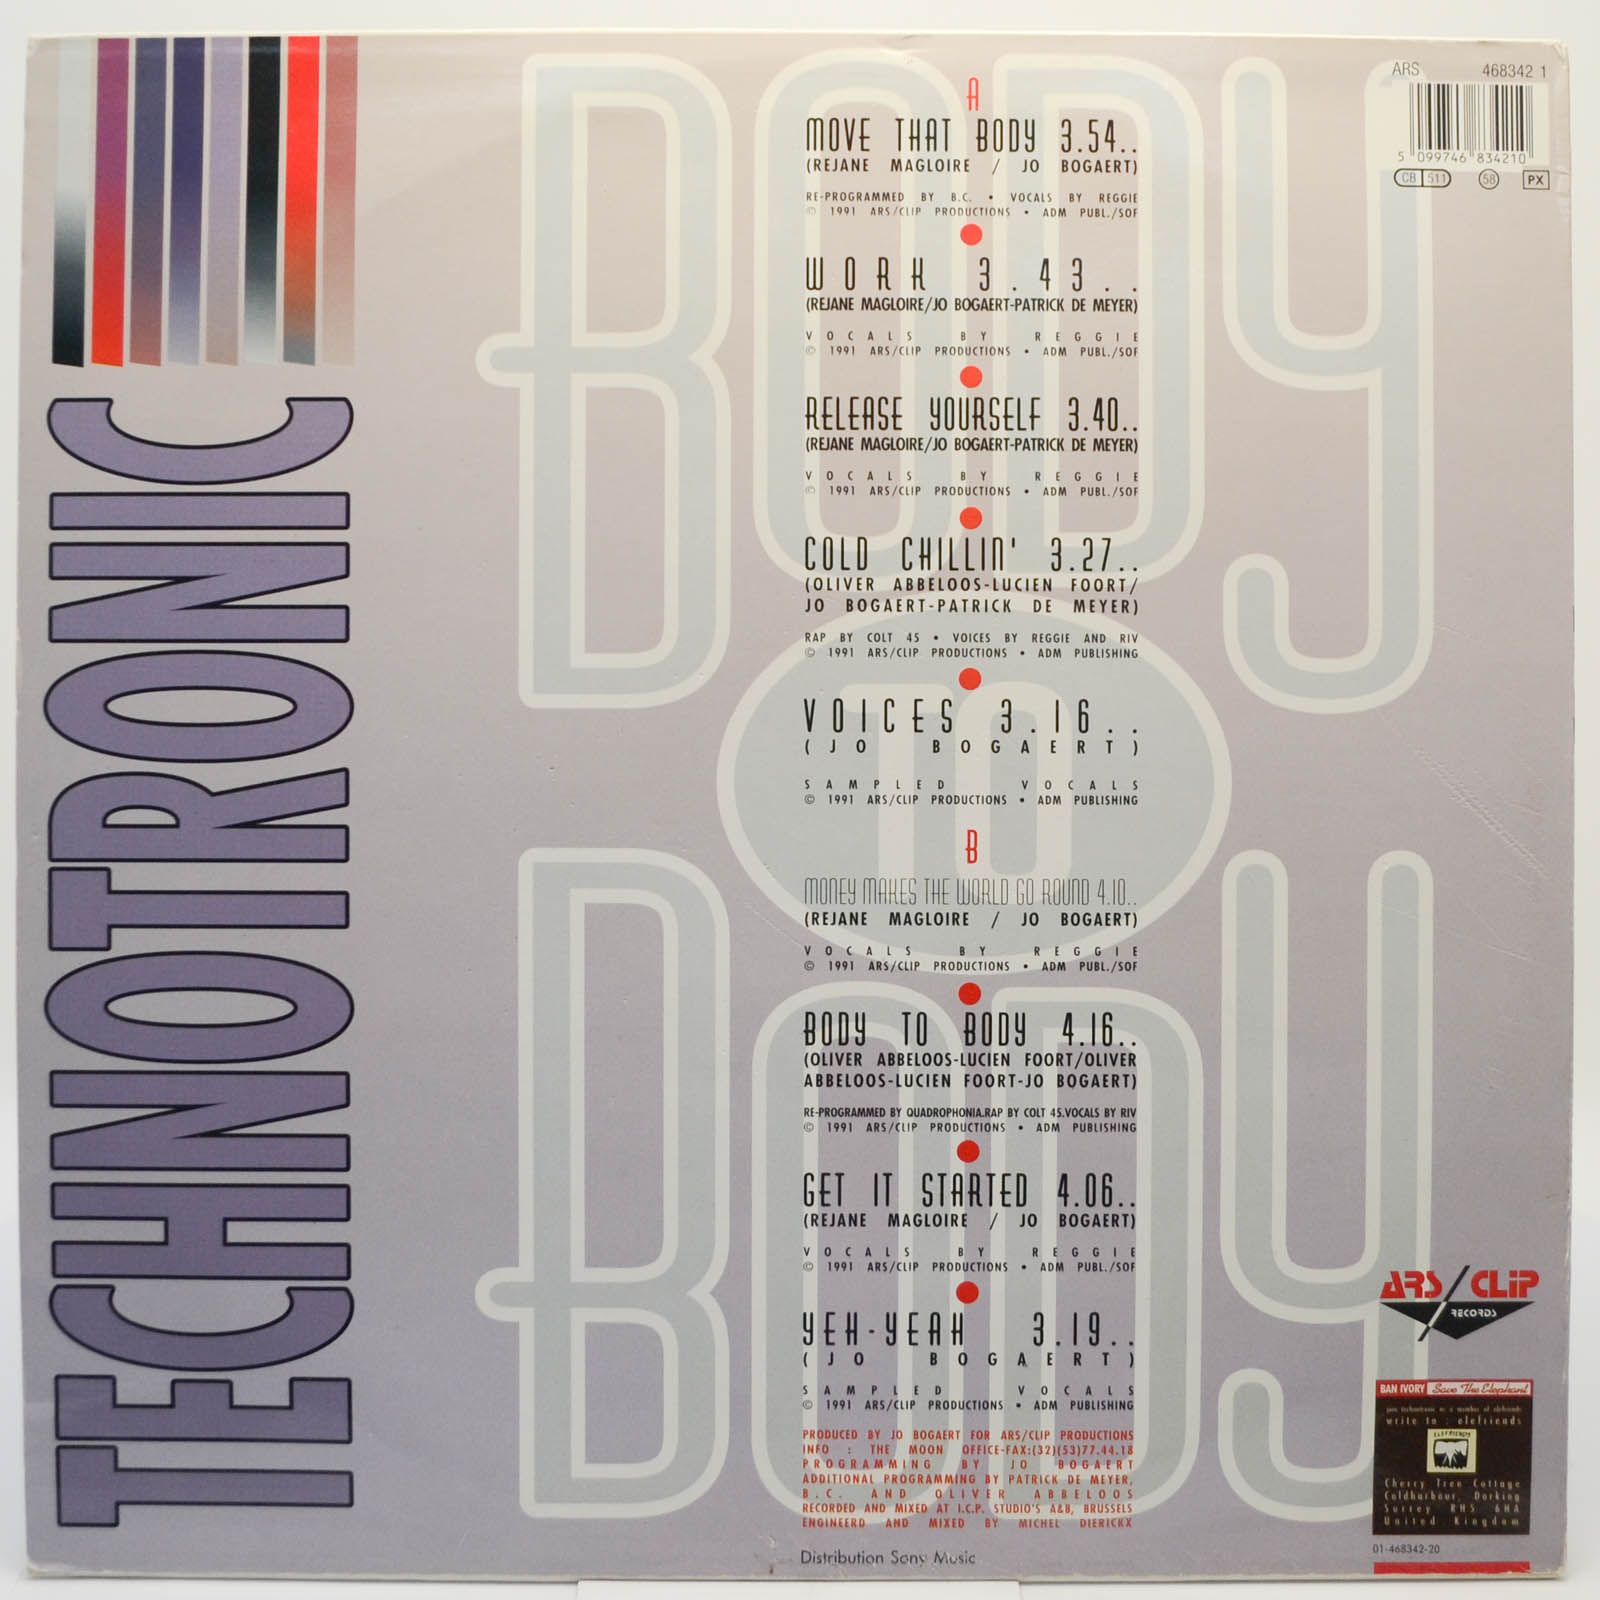 Technotronic — Body To Body, 1991